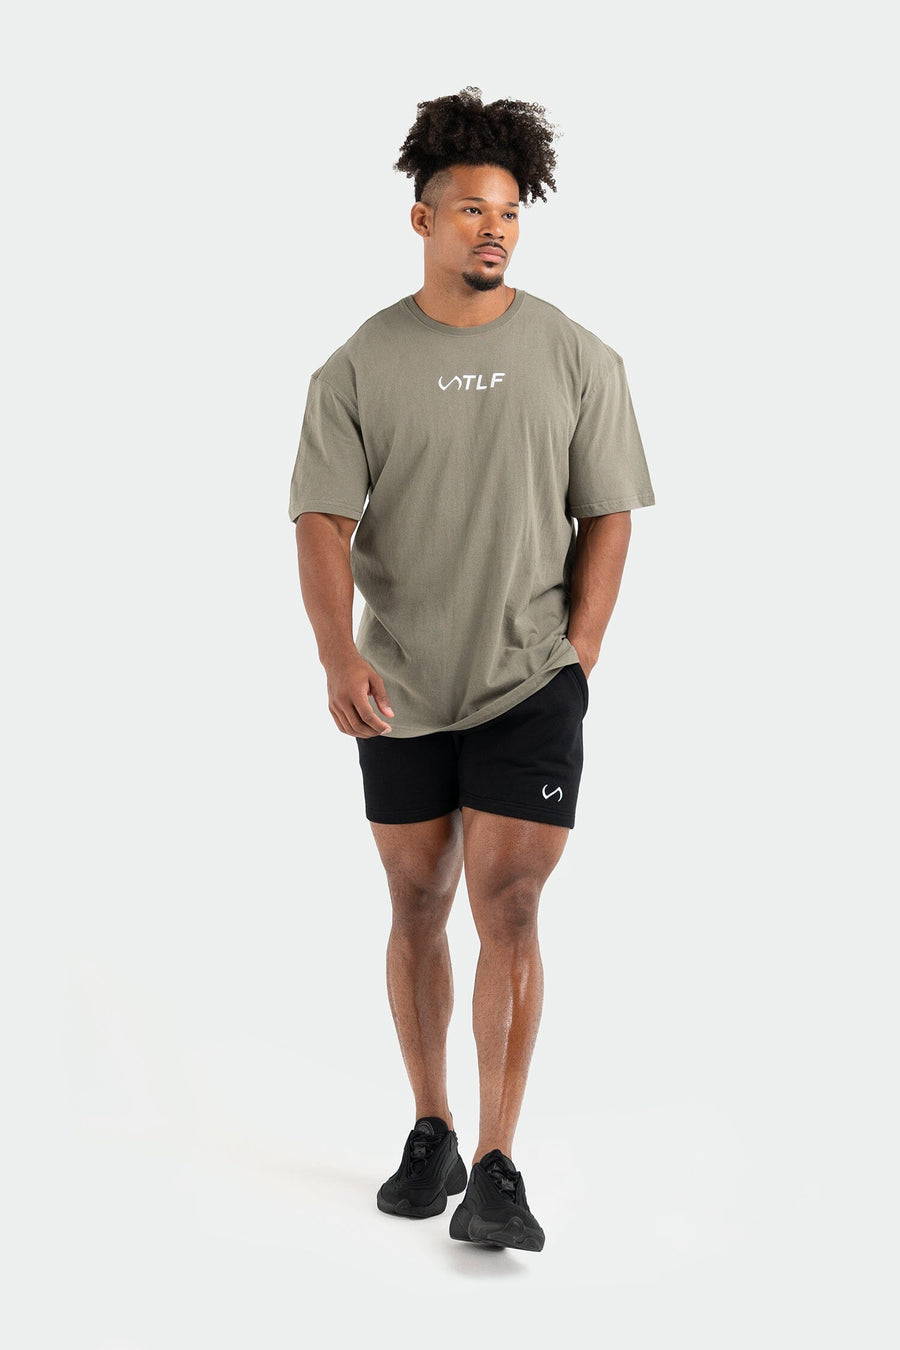 TLF Pivotal 6" Fleece Shorts – Men’s Gym Shorts - 6 Inch Inseam Men's Shorts - Black - 6